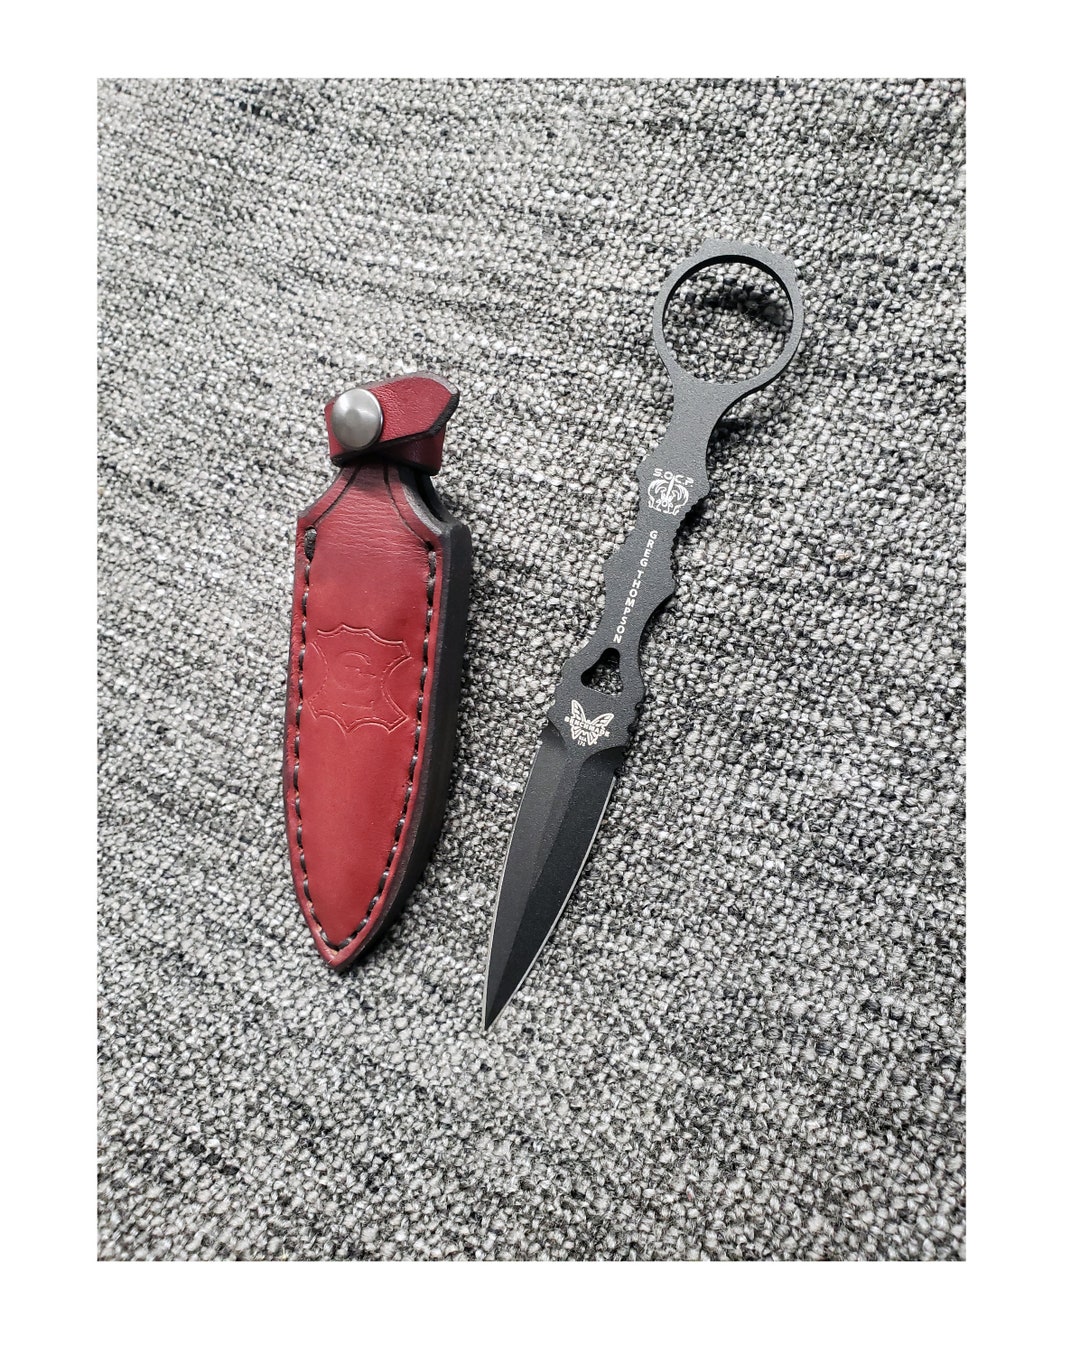 Handmade Leather Kitchen Knife Roll - Grommet's Leathercraft